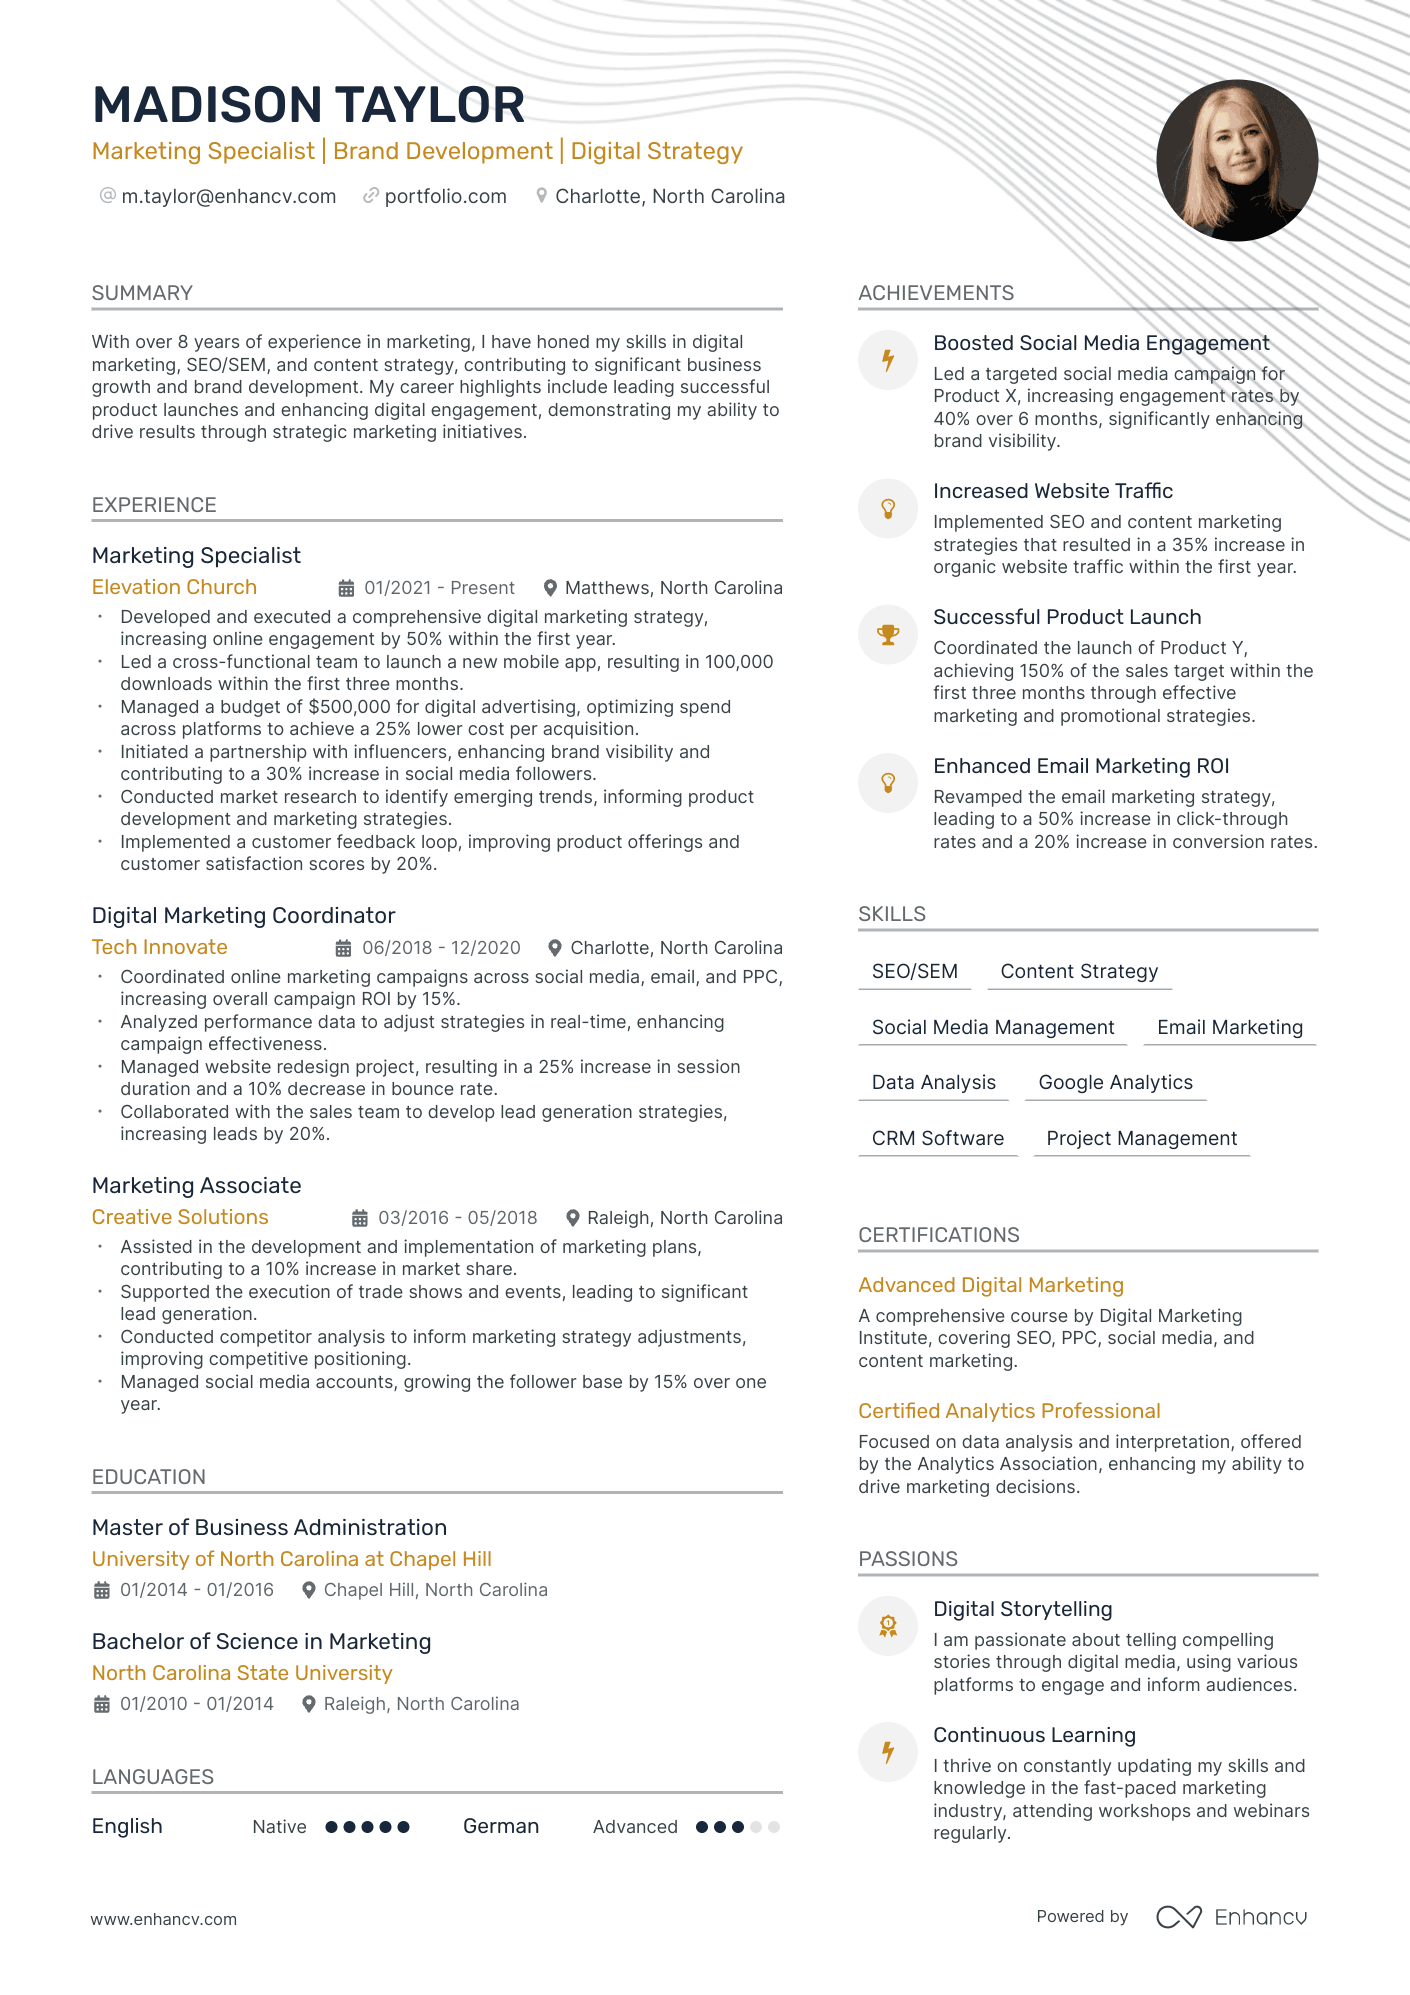 Marketing Specialist resume example